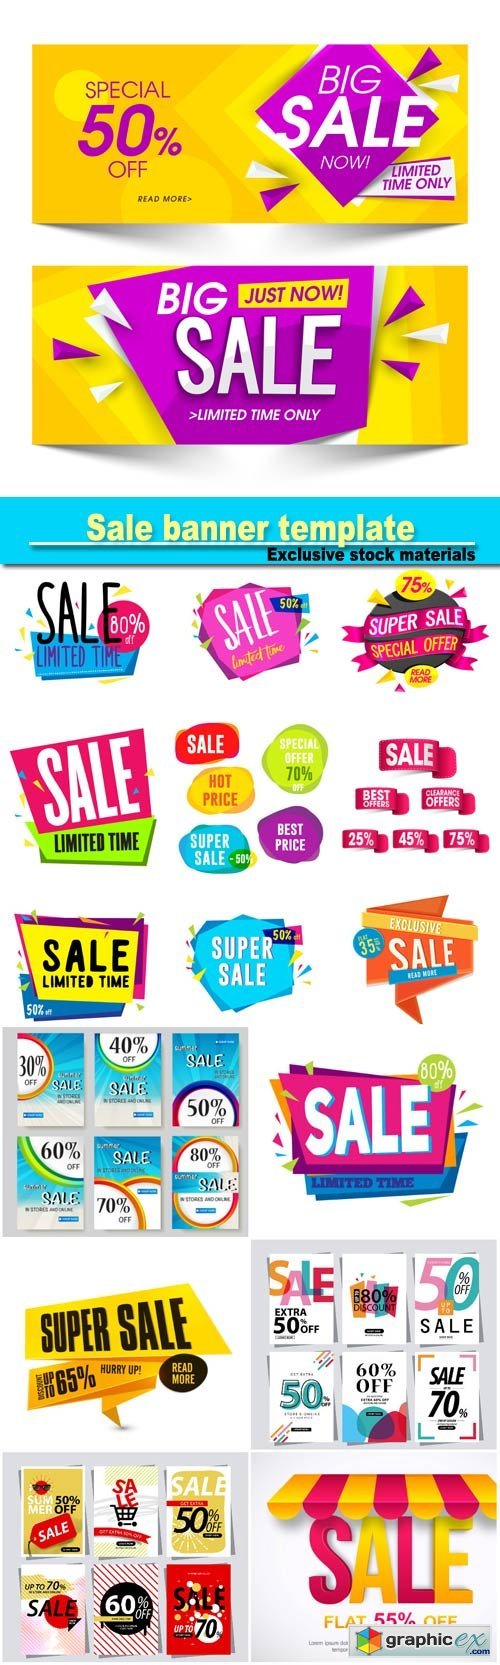 Sale banner template, sale sticker or label